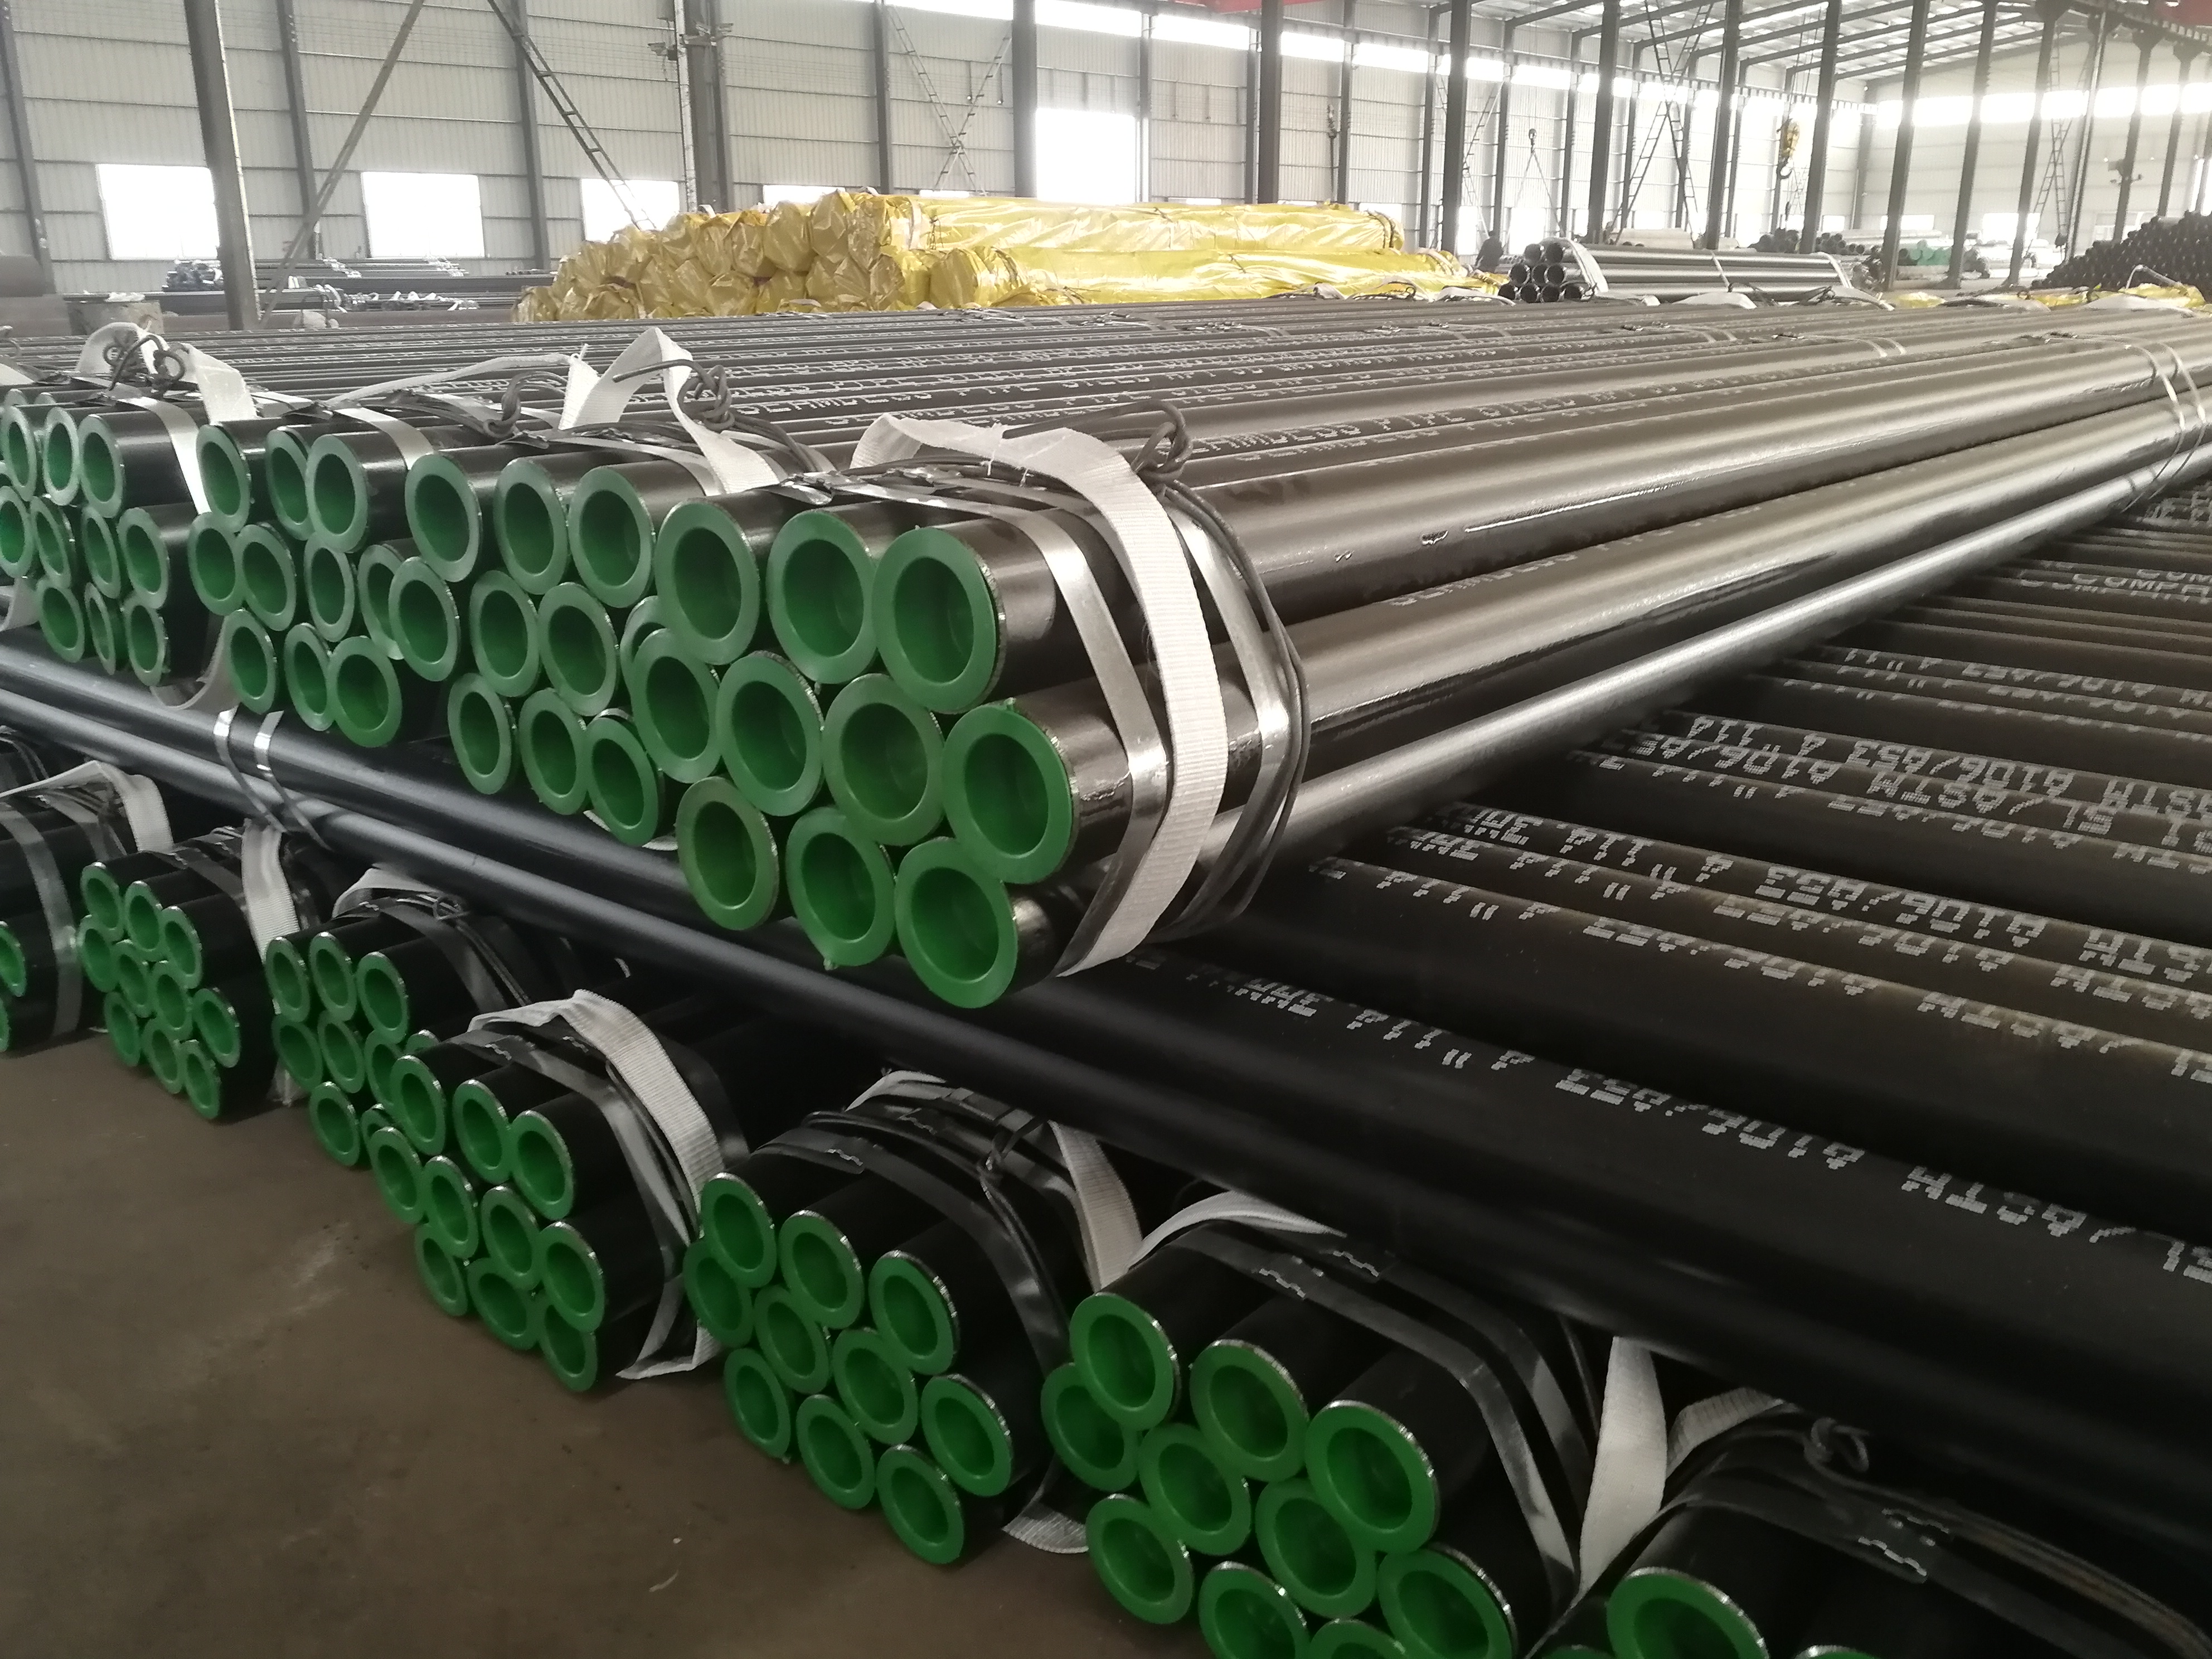 ASTM A 106 Black Carbon Seamless Steel Tubes pro varietate caliditatis officii applicationes